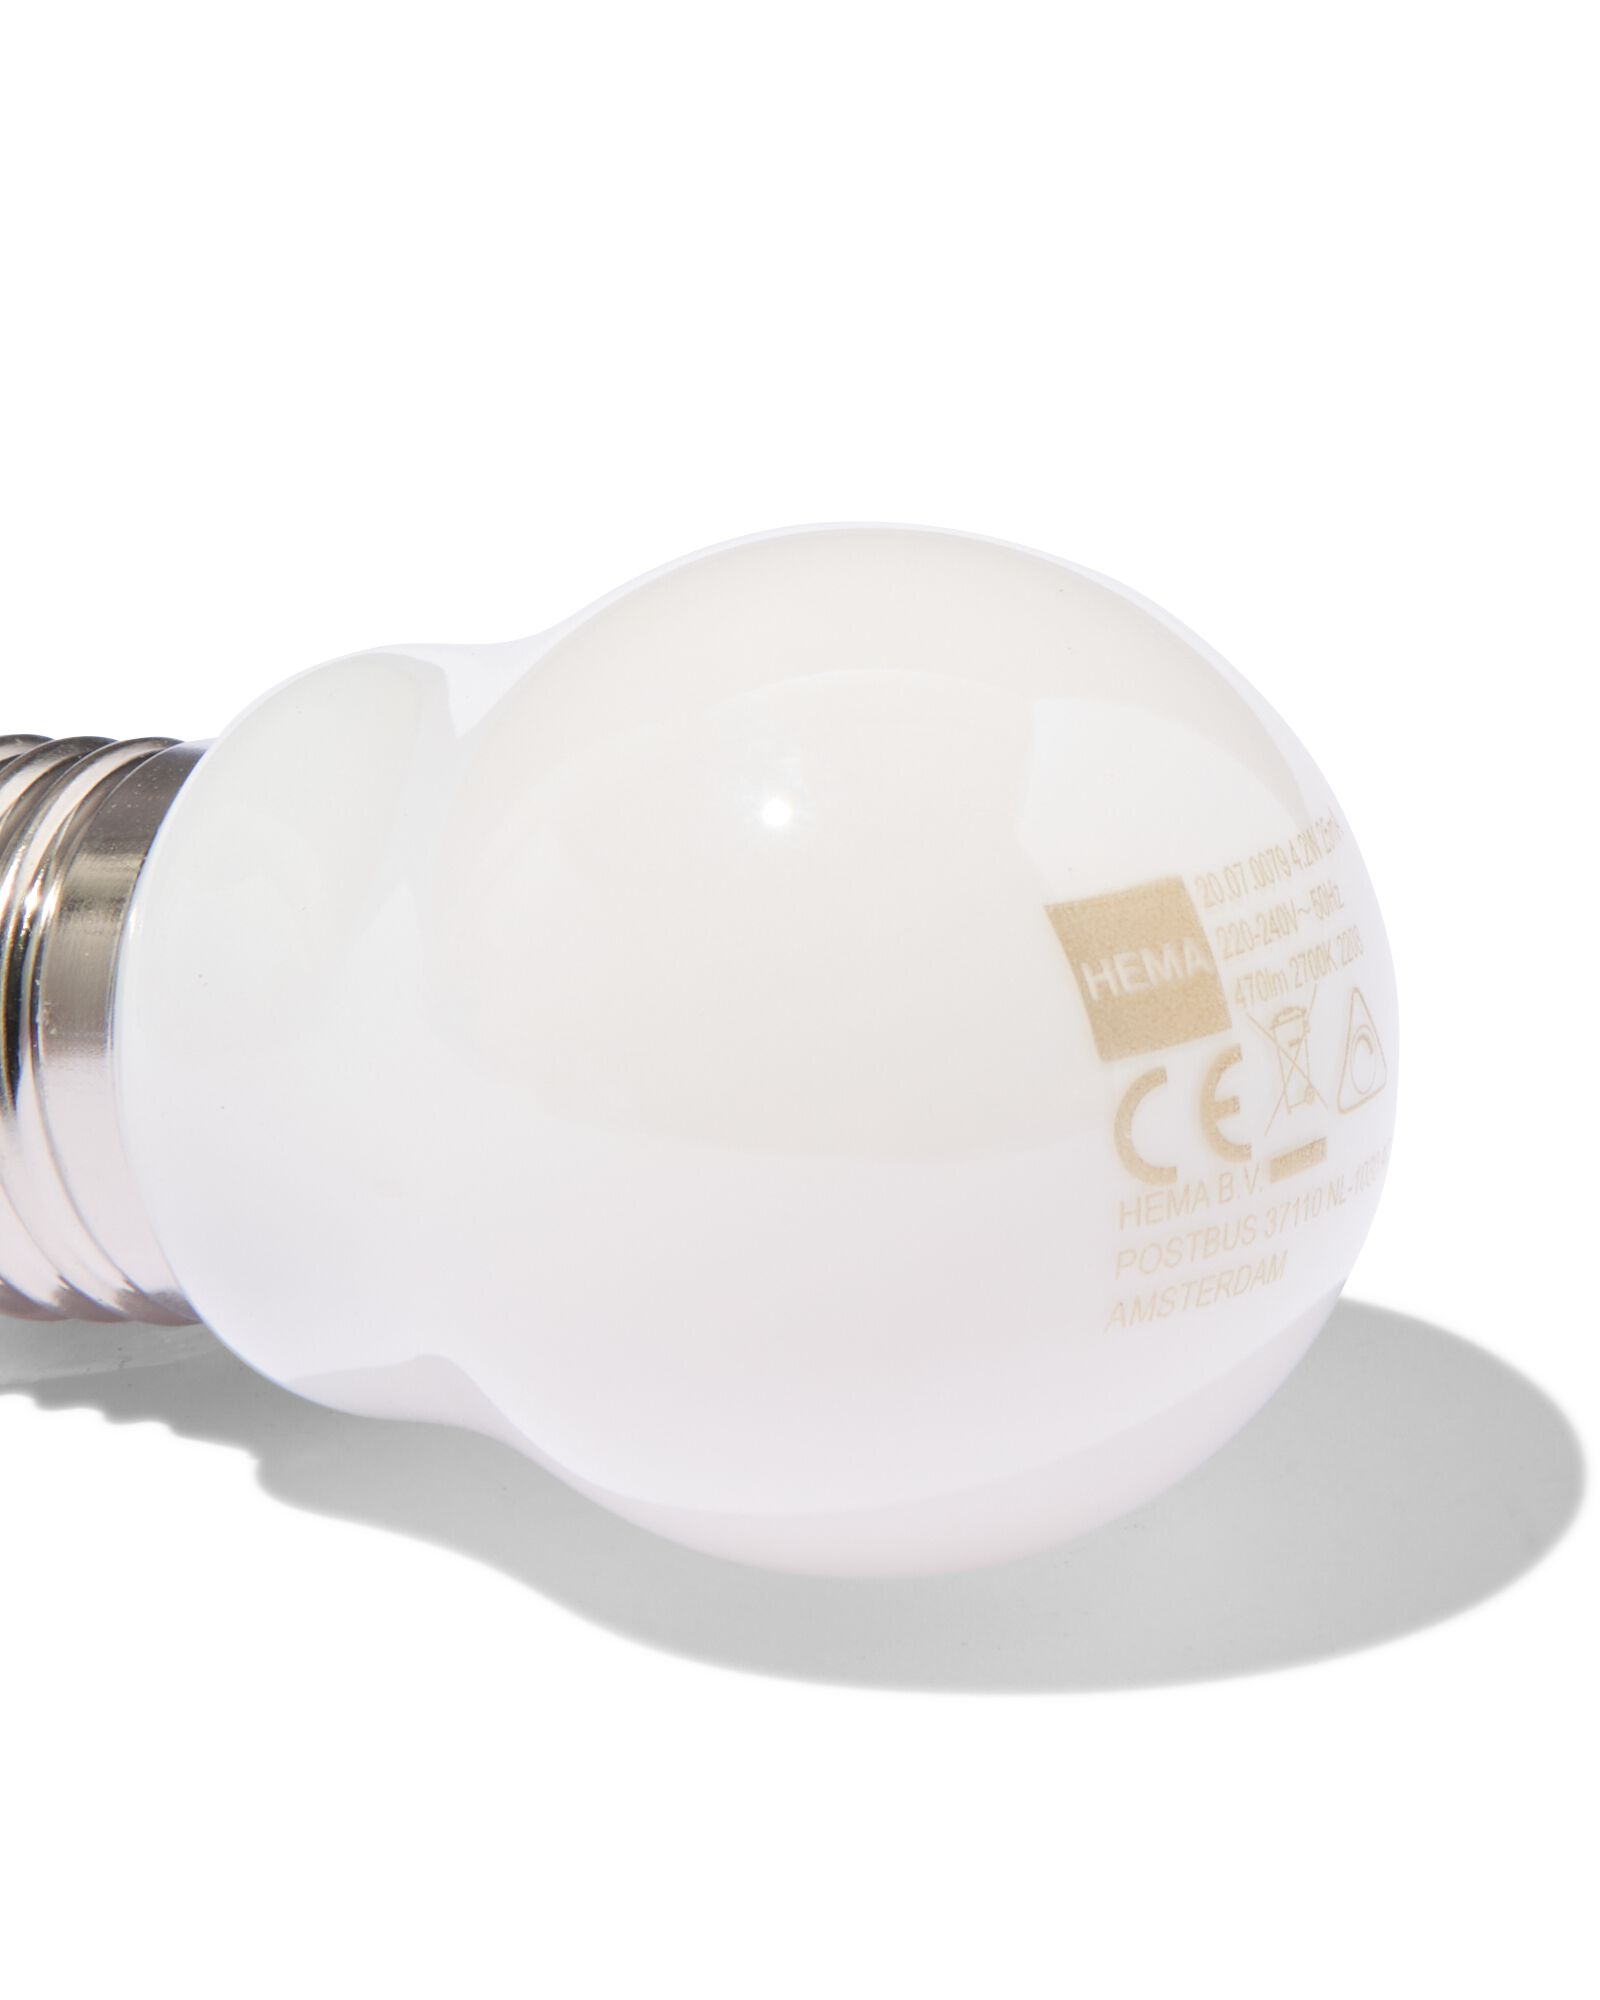 LED-Lampe, satiniertes Glas, dimmbar, HEMA lm, - Kugellampe 470 4.2 W, E27